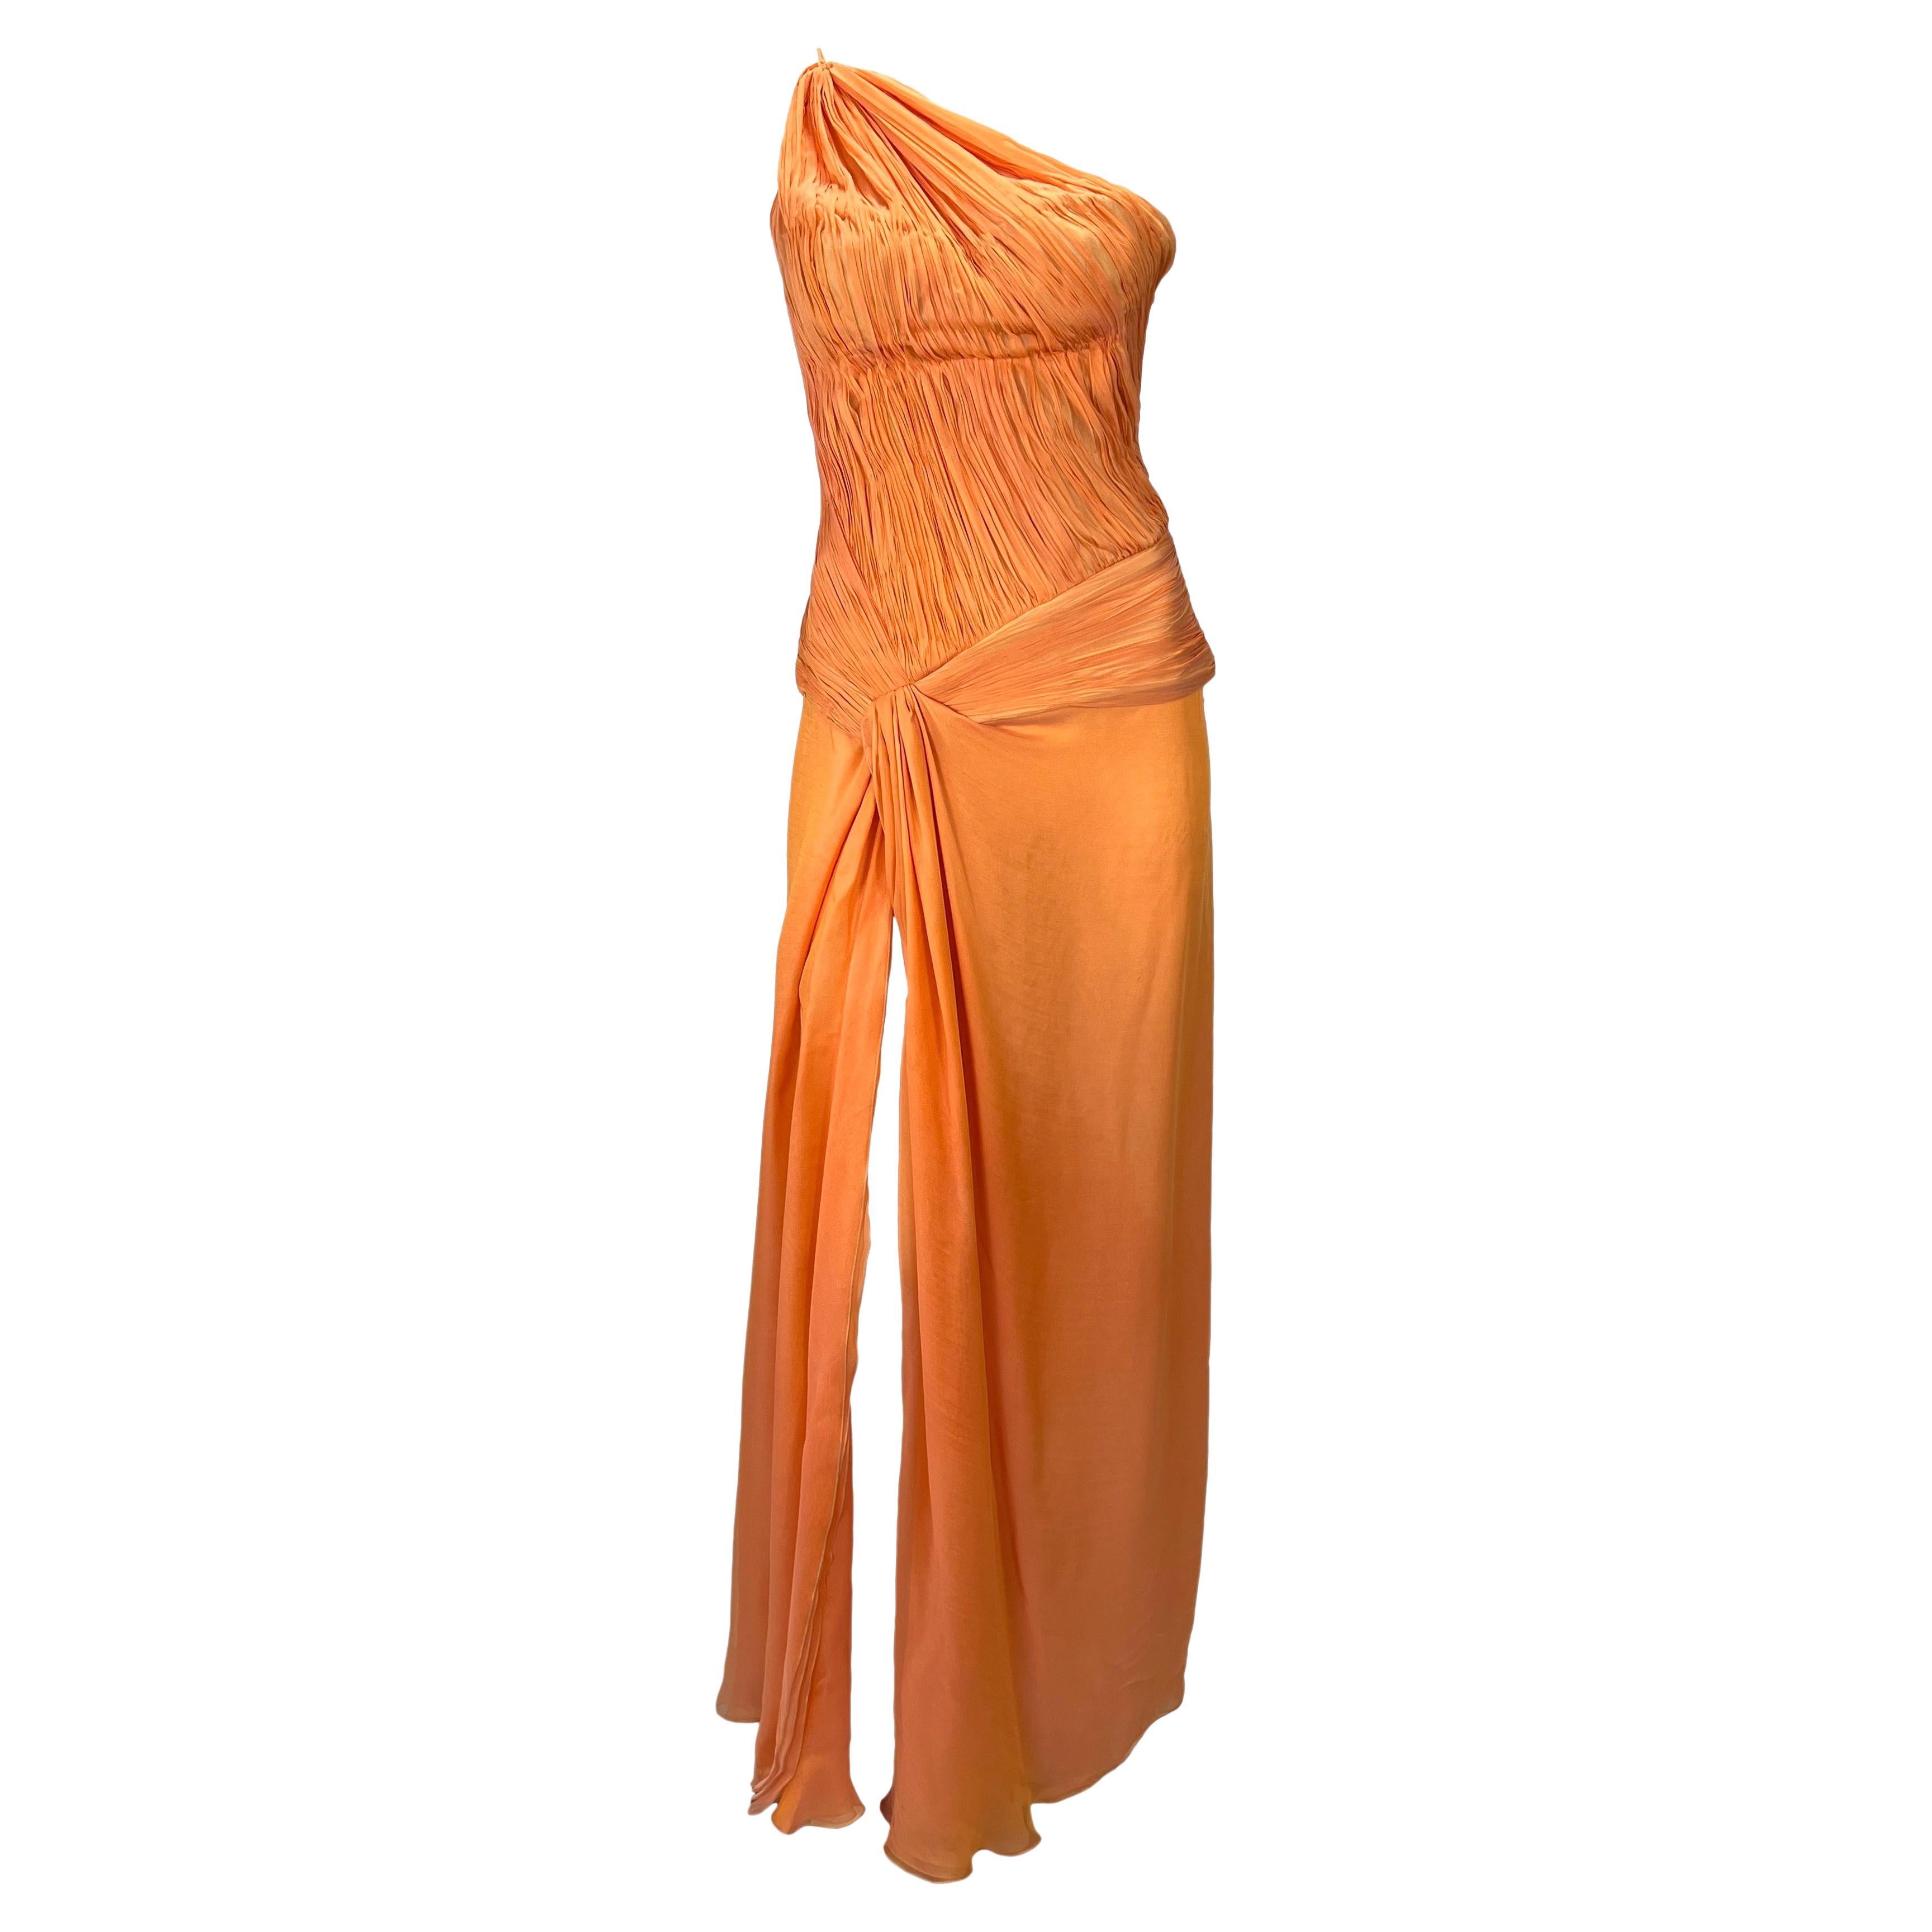 S/S 2005 Roberto Cavalli Ruched Orange Silk Chiffon Asymmetric High Slit Gown